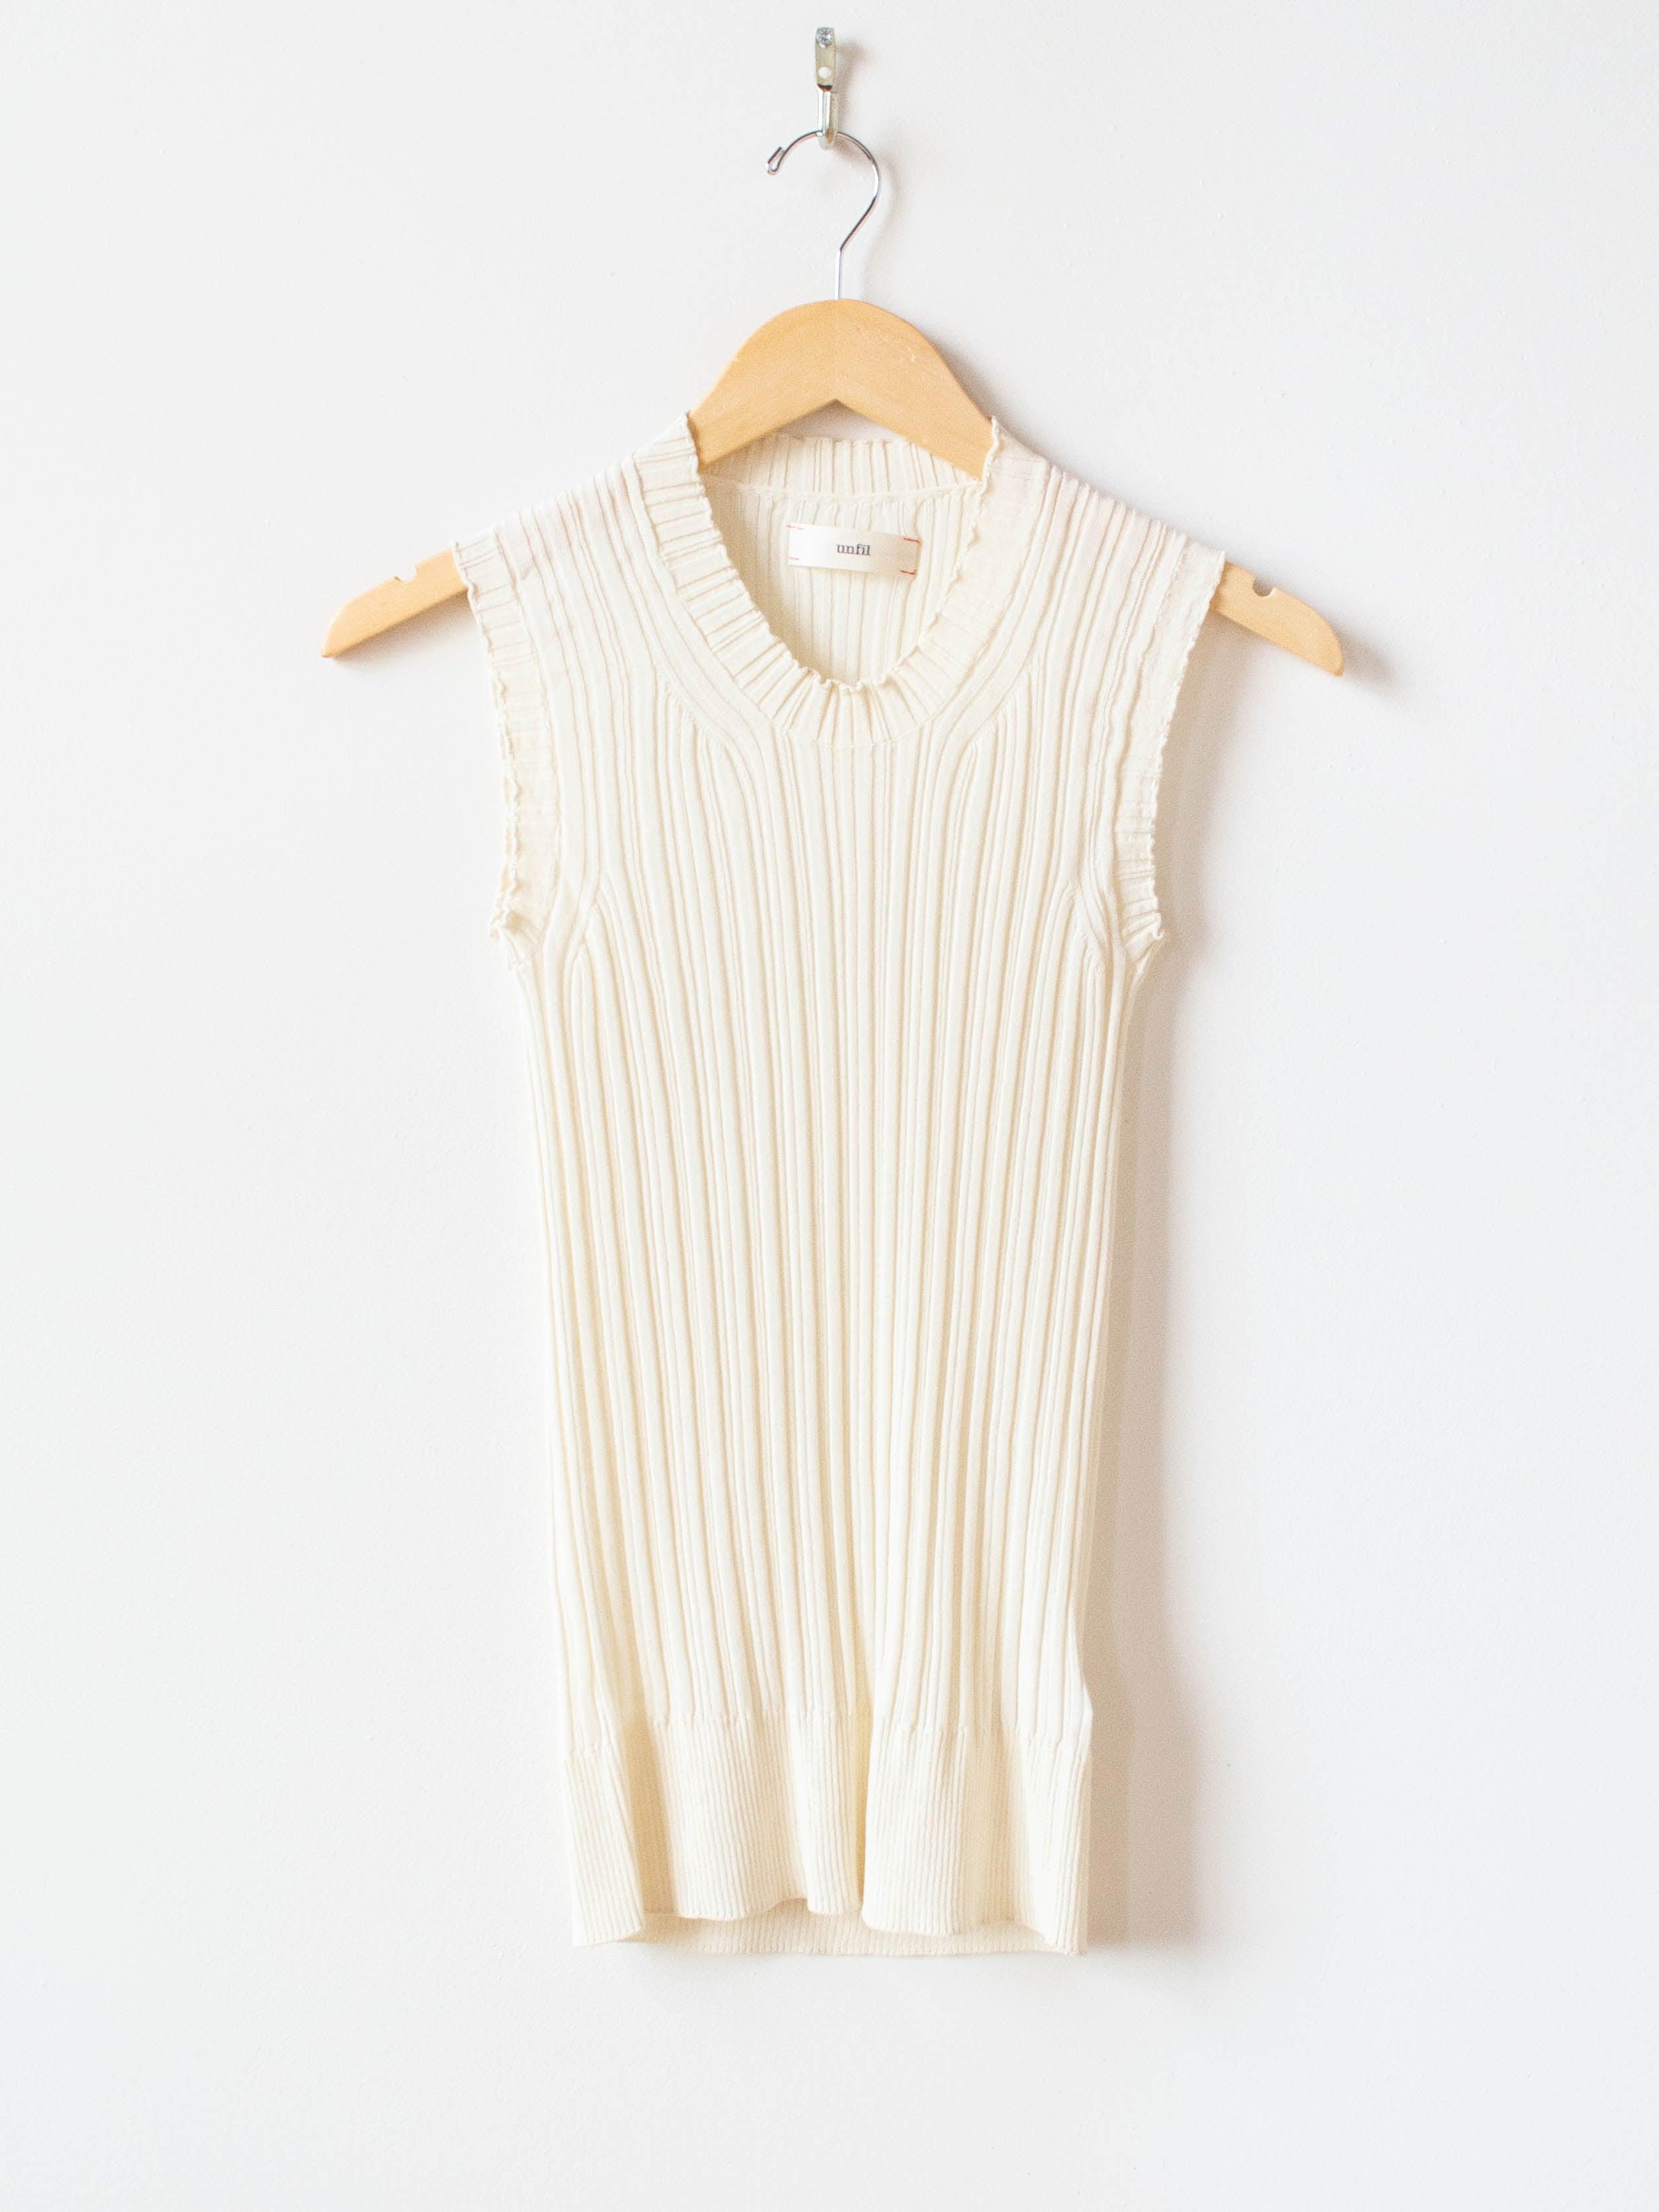 Namu Shop - Unfil High Twist Cotton Ribbed Knit Sleeveless Top - Off White